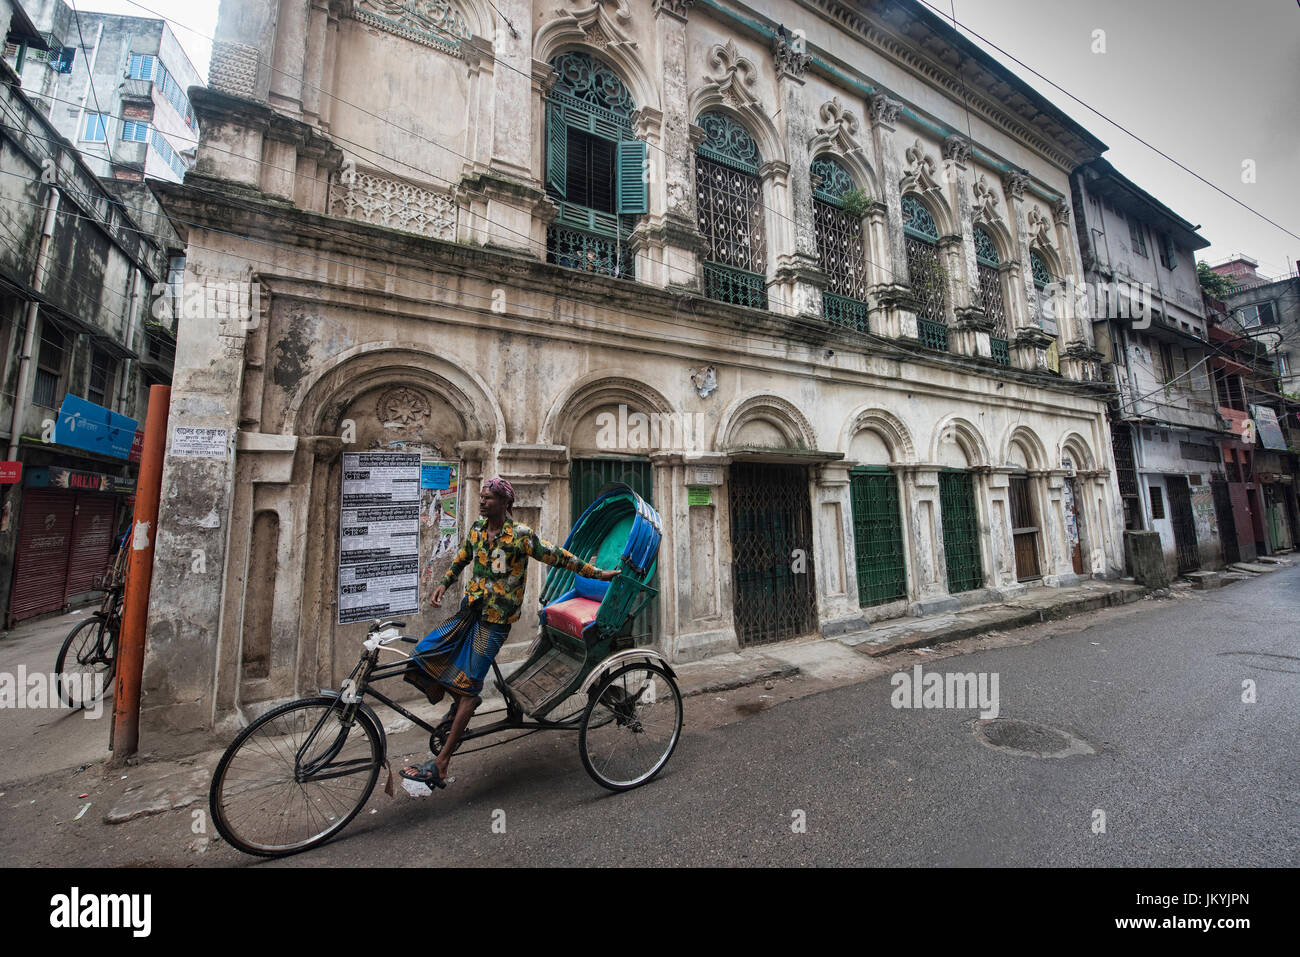 Rickshaw in front of old Hindu merchant building, Dhaka, Bangladesh Stock Photo